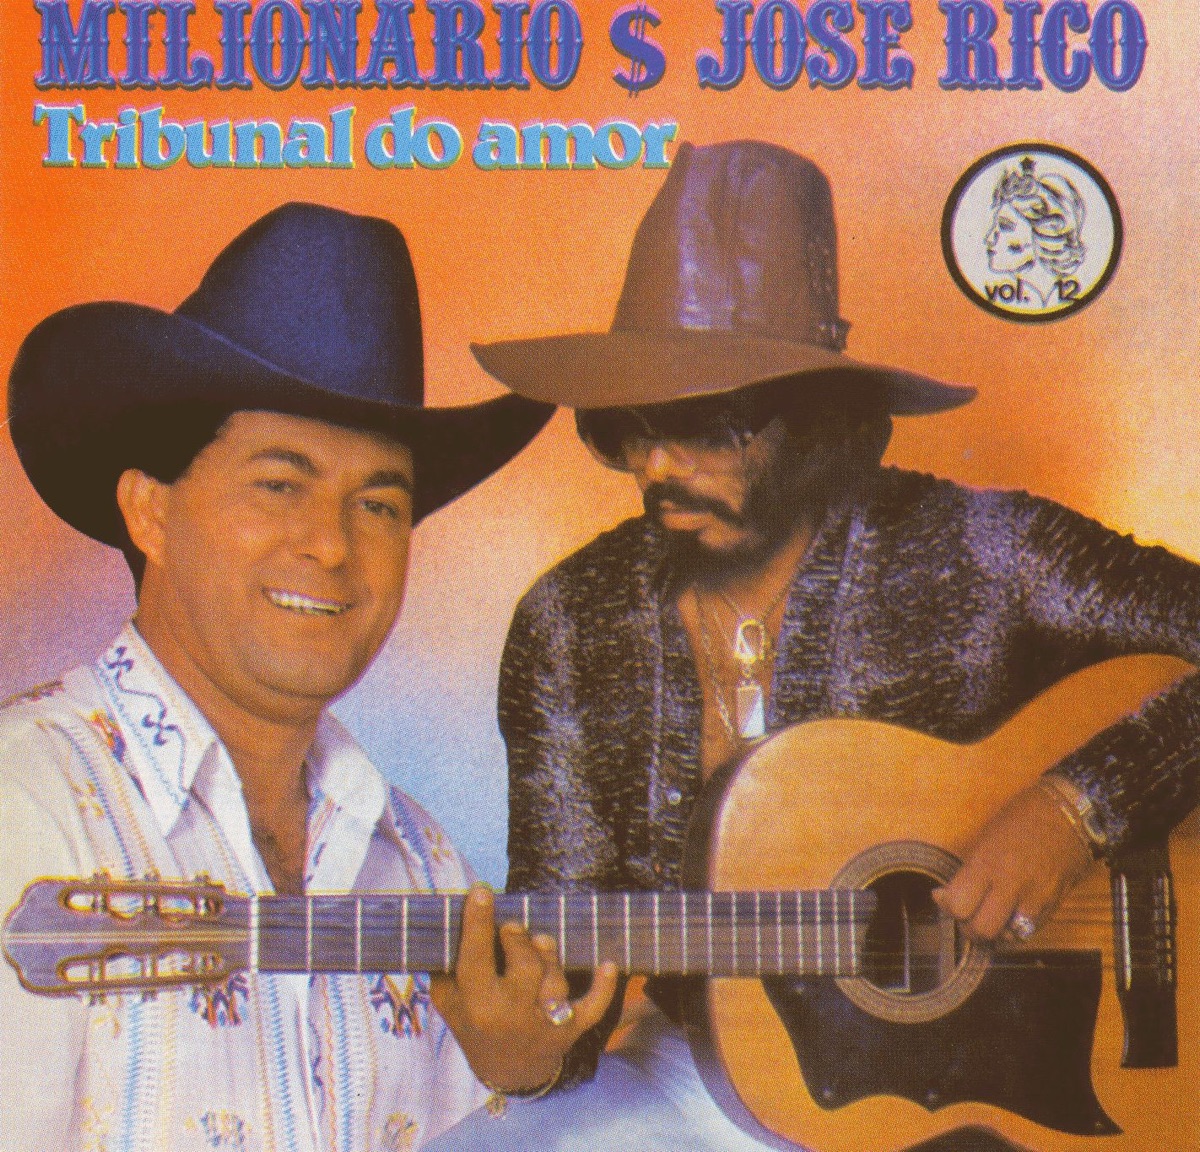 Jogo Do Amor - Canción de Milionário & José Rico - Apple Music